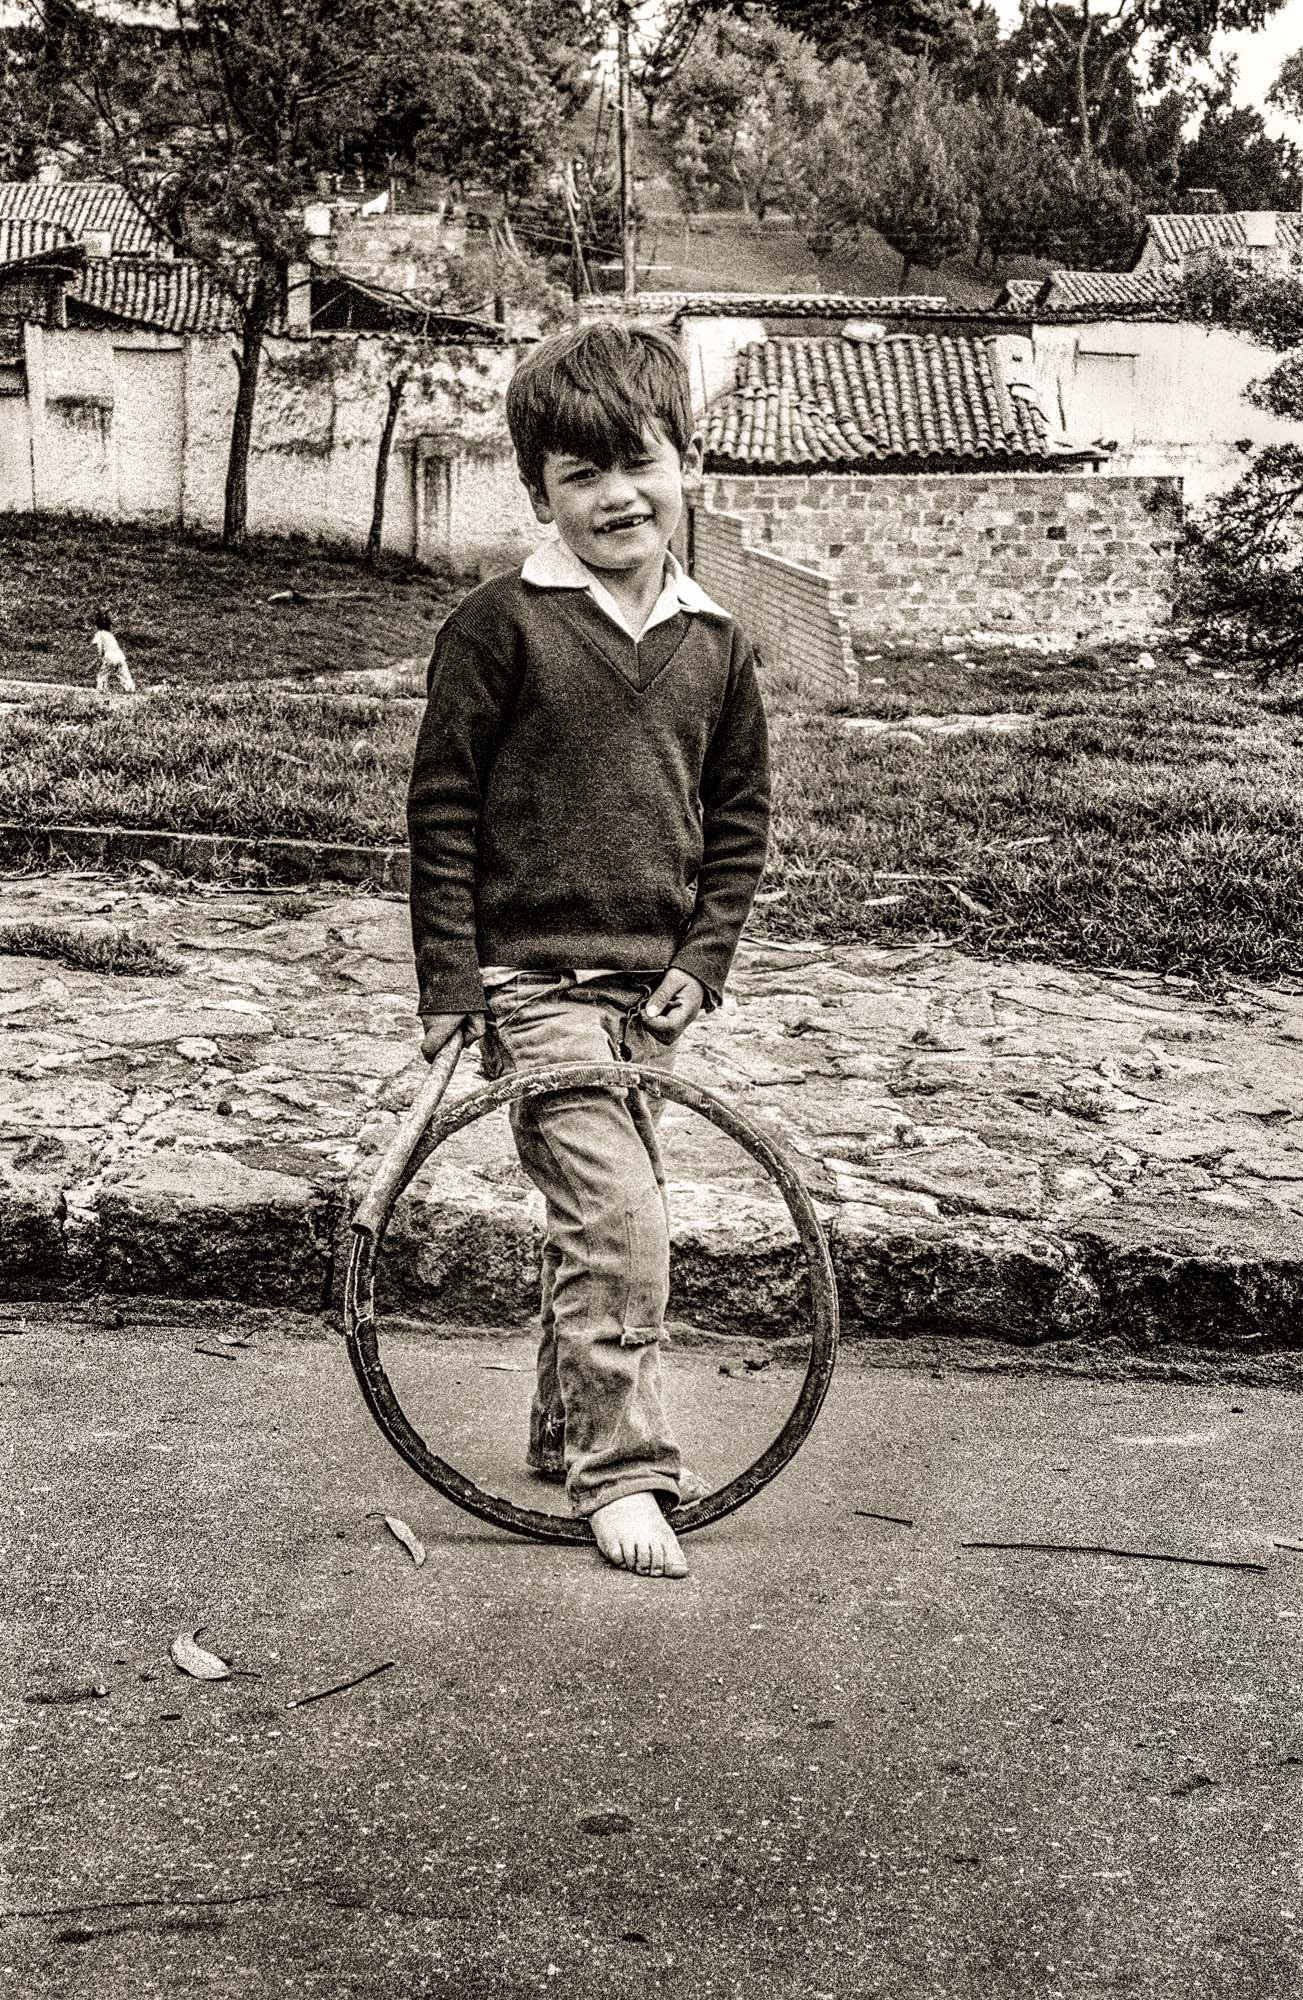 Boy and Bike Rim